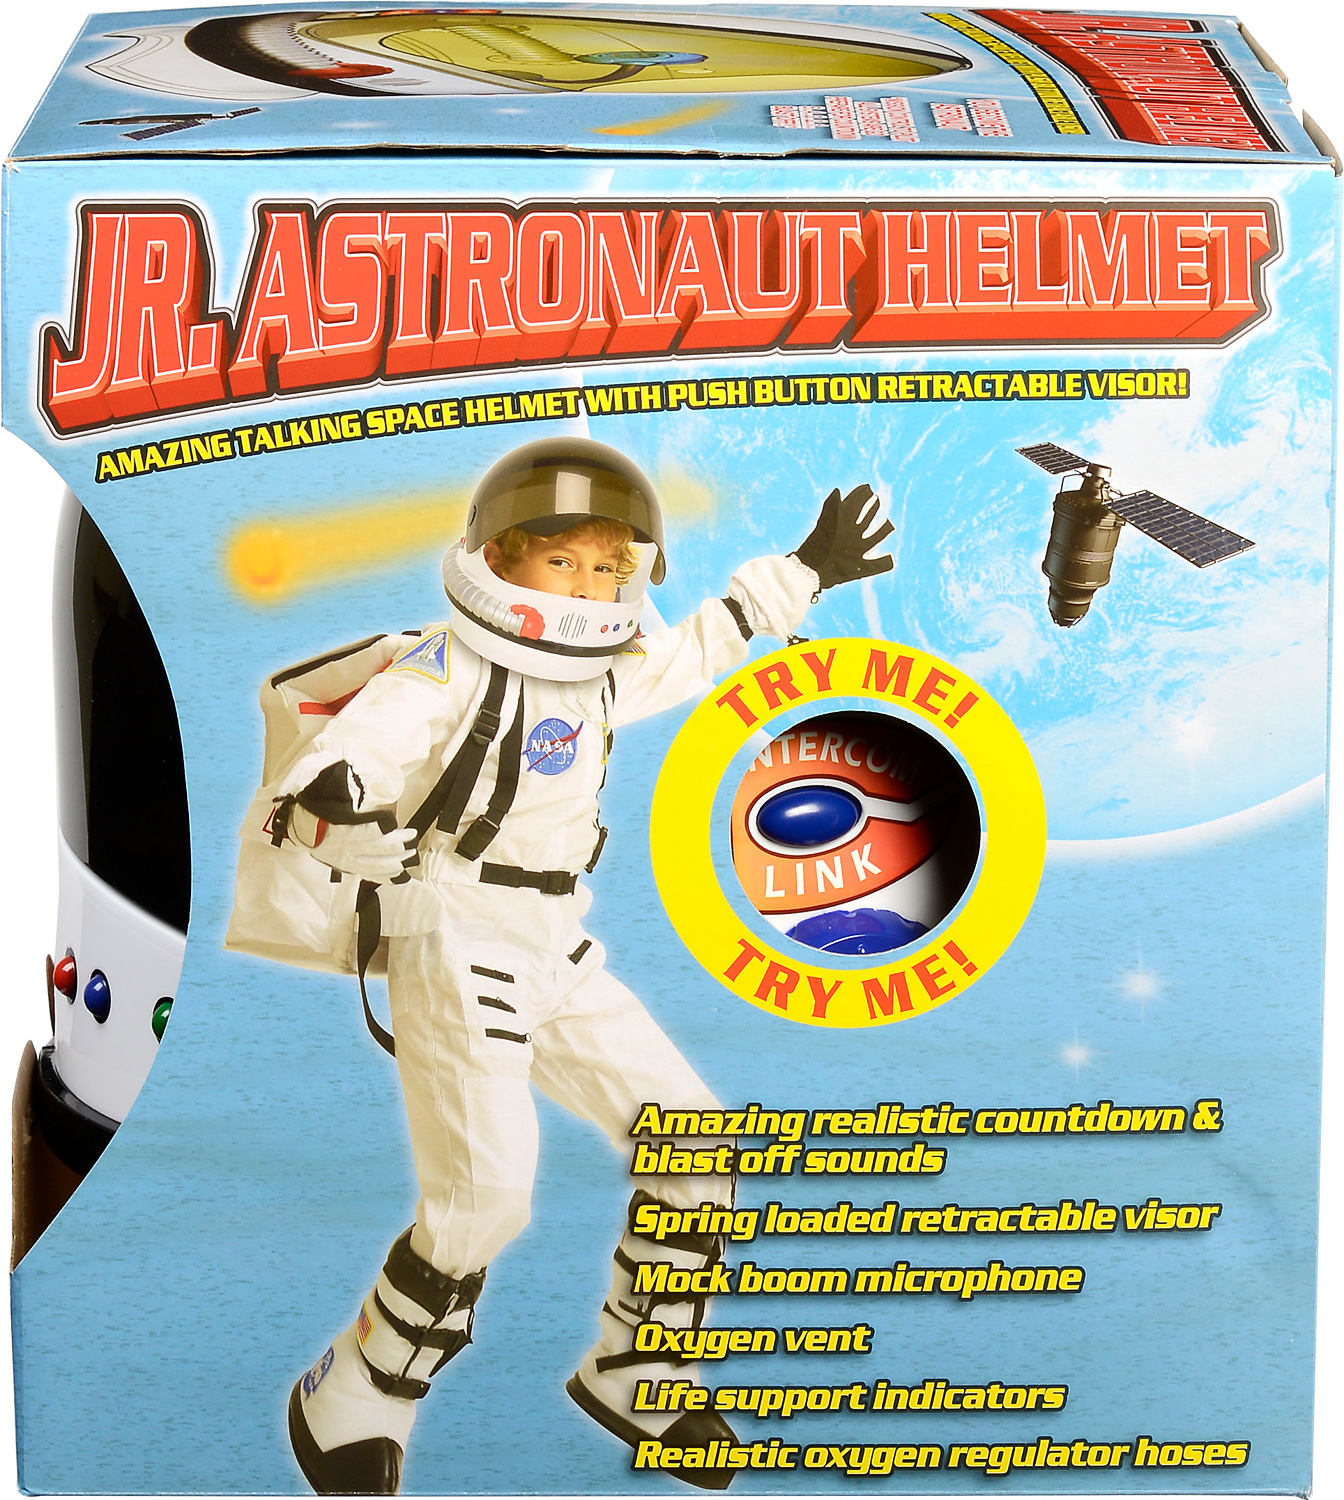 Aeromax Jr Astronaut Helmet